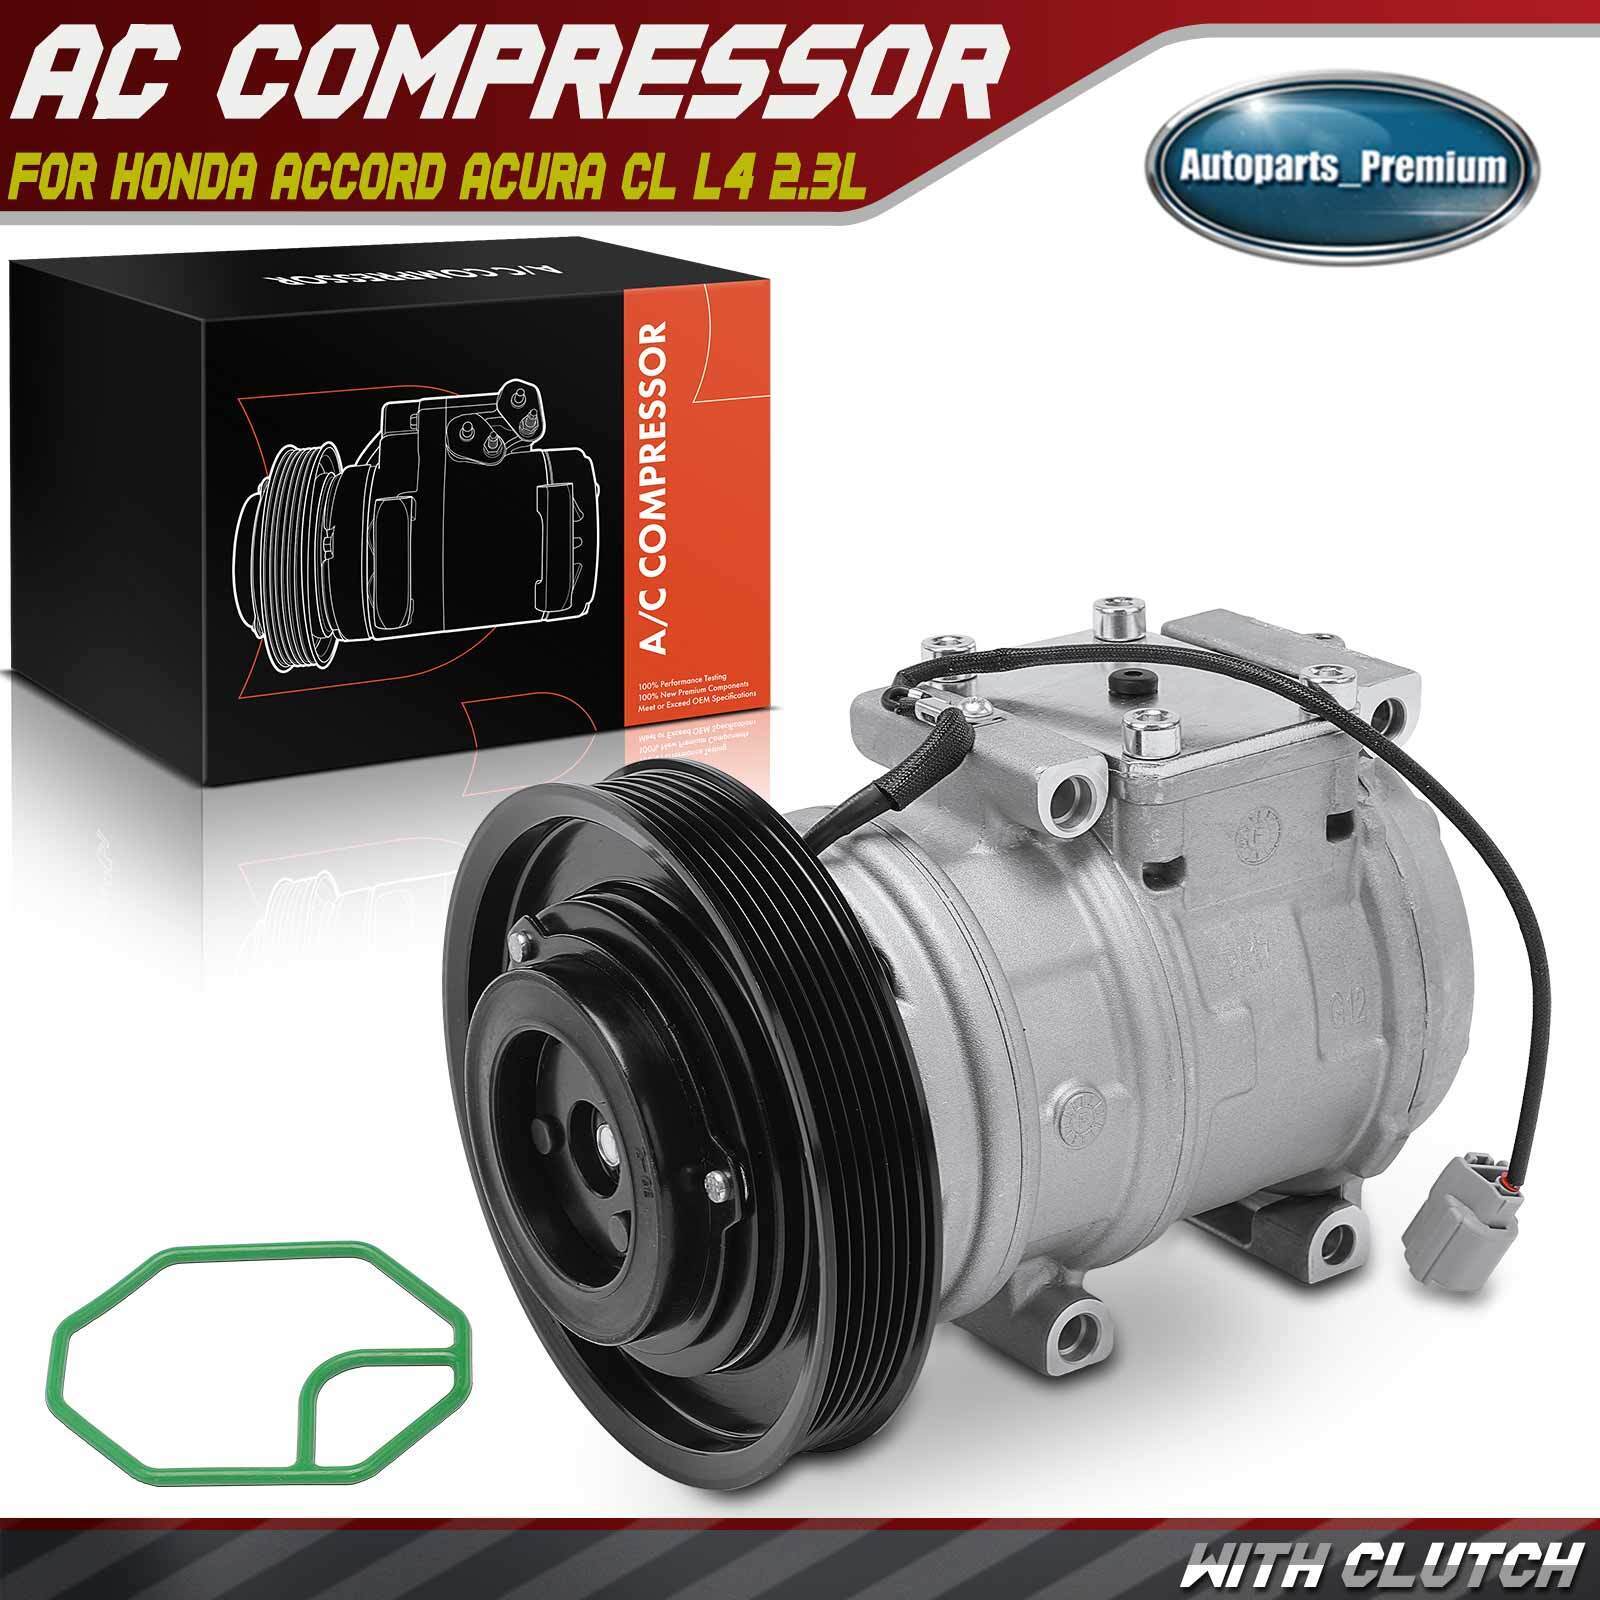 AC Compressor with Clutch for Acura CL 1998-1999 Honda Accord 1998-2002 L4 2.3L